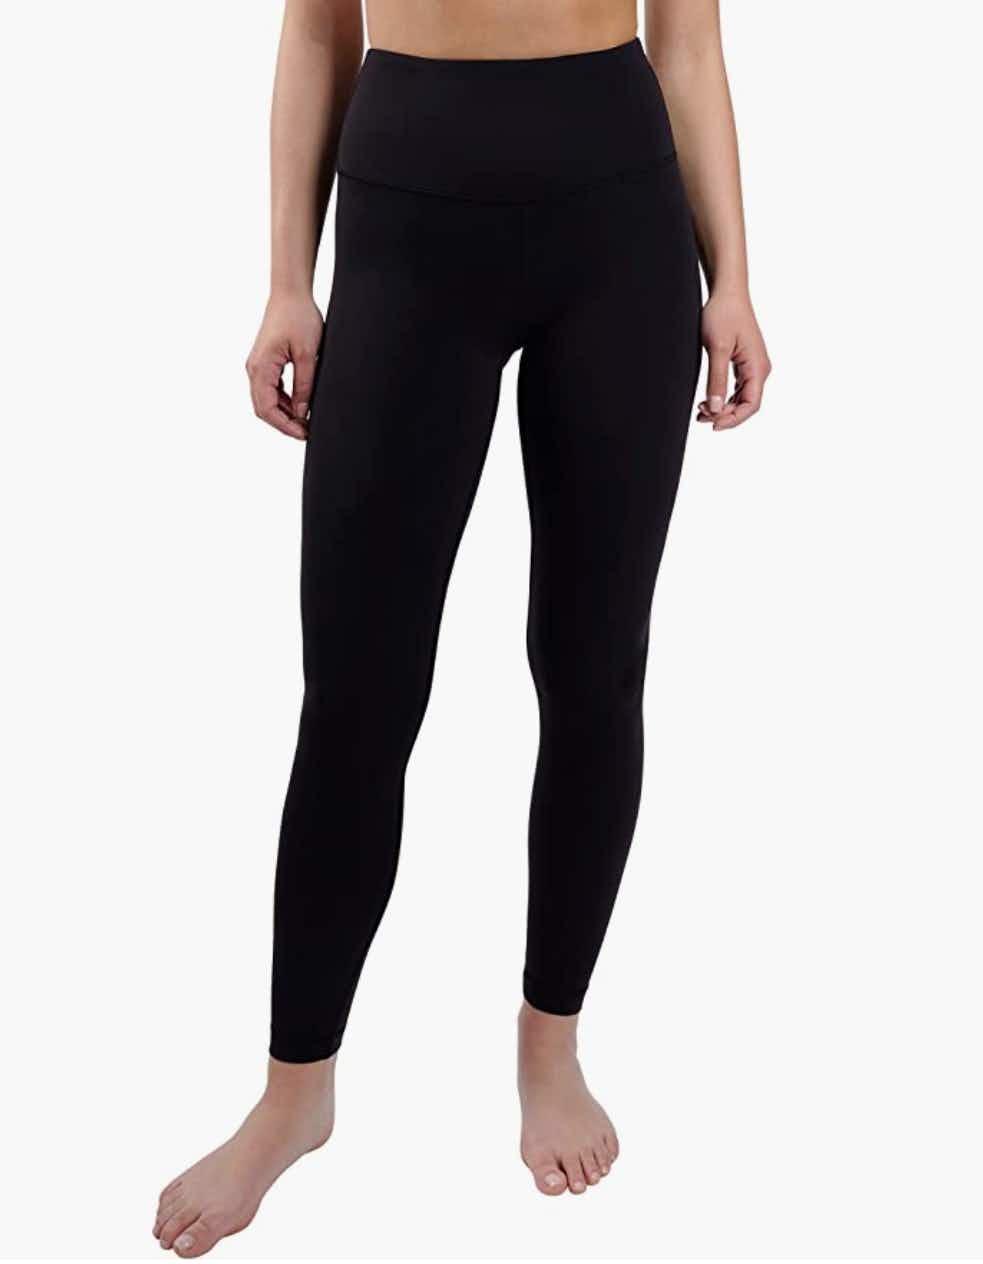 Yogalicious High Waist Ultra Soft Leggings for Women in Black